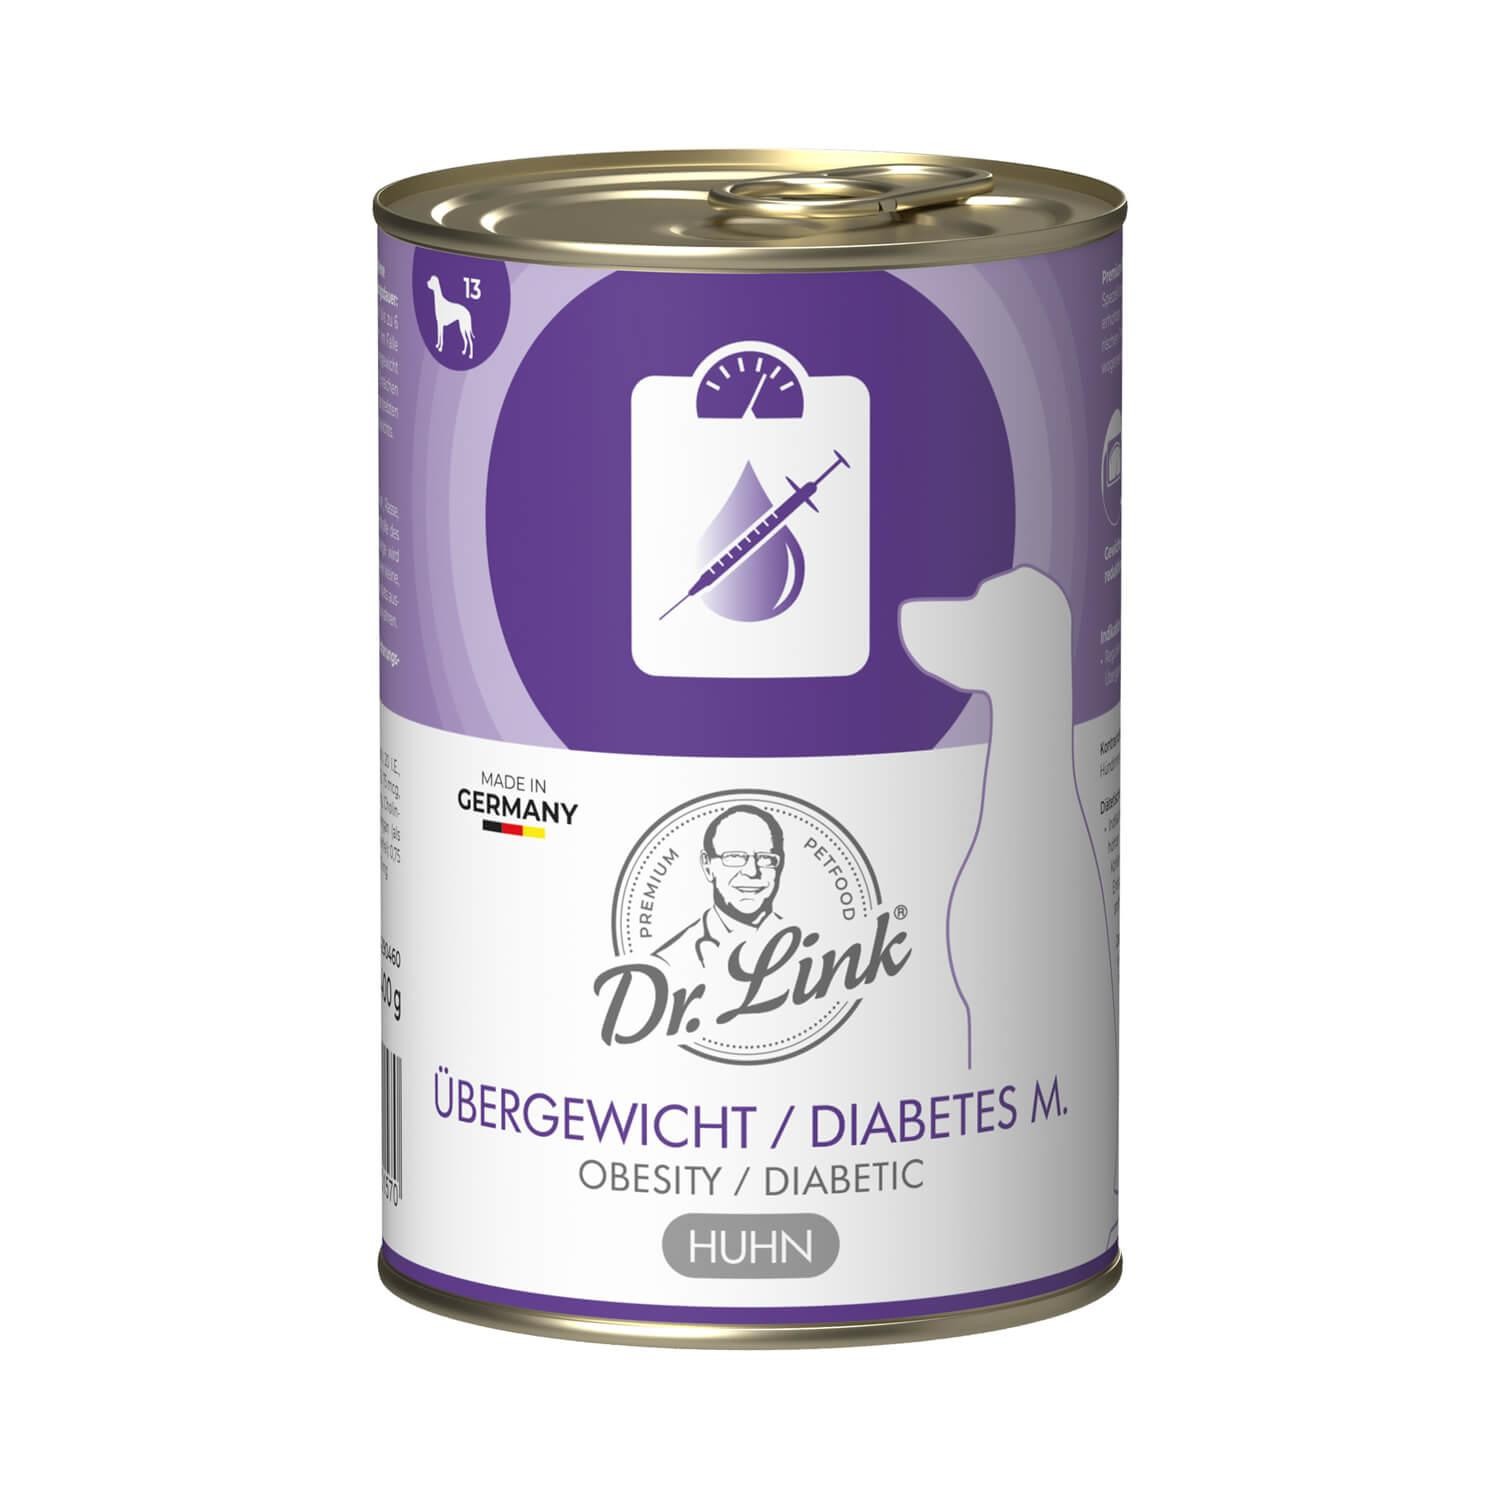 Dr. Link® SPEZIAL-DIÄT 1x400g Übergewicht / Diabetes m. | Obesity / Diabetic Huhn | Probedose